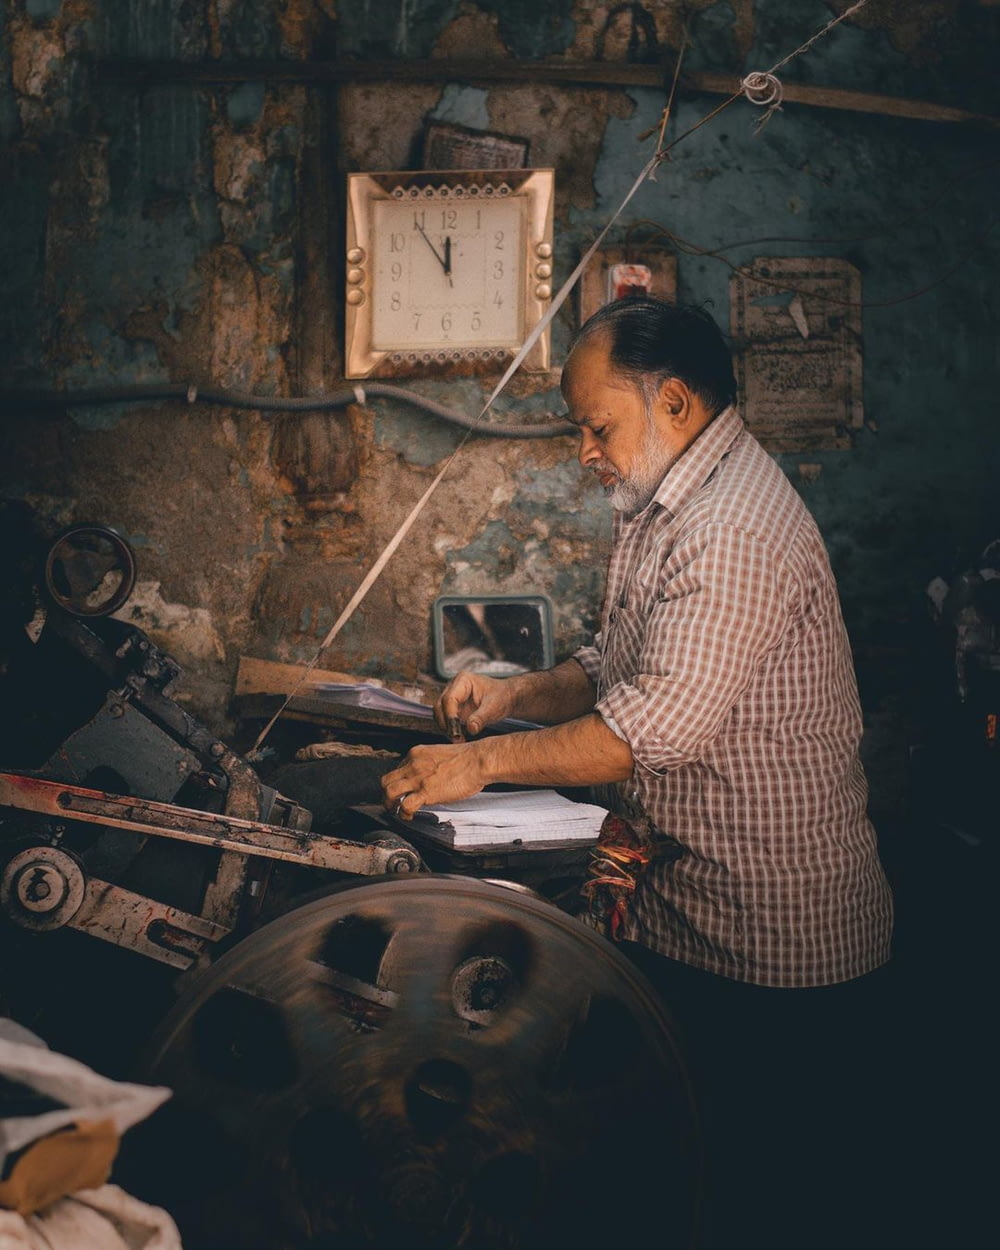 a man working on a machine